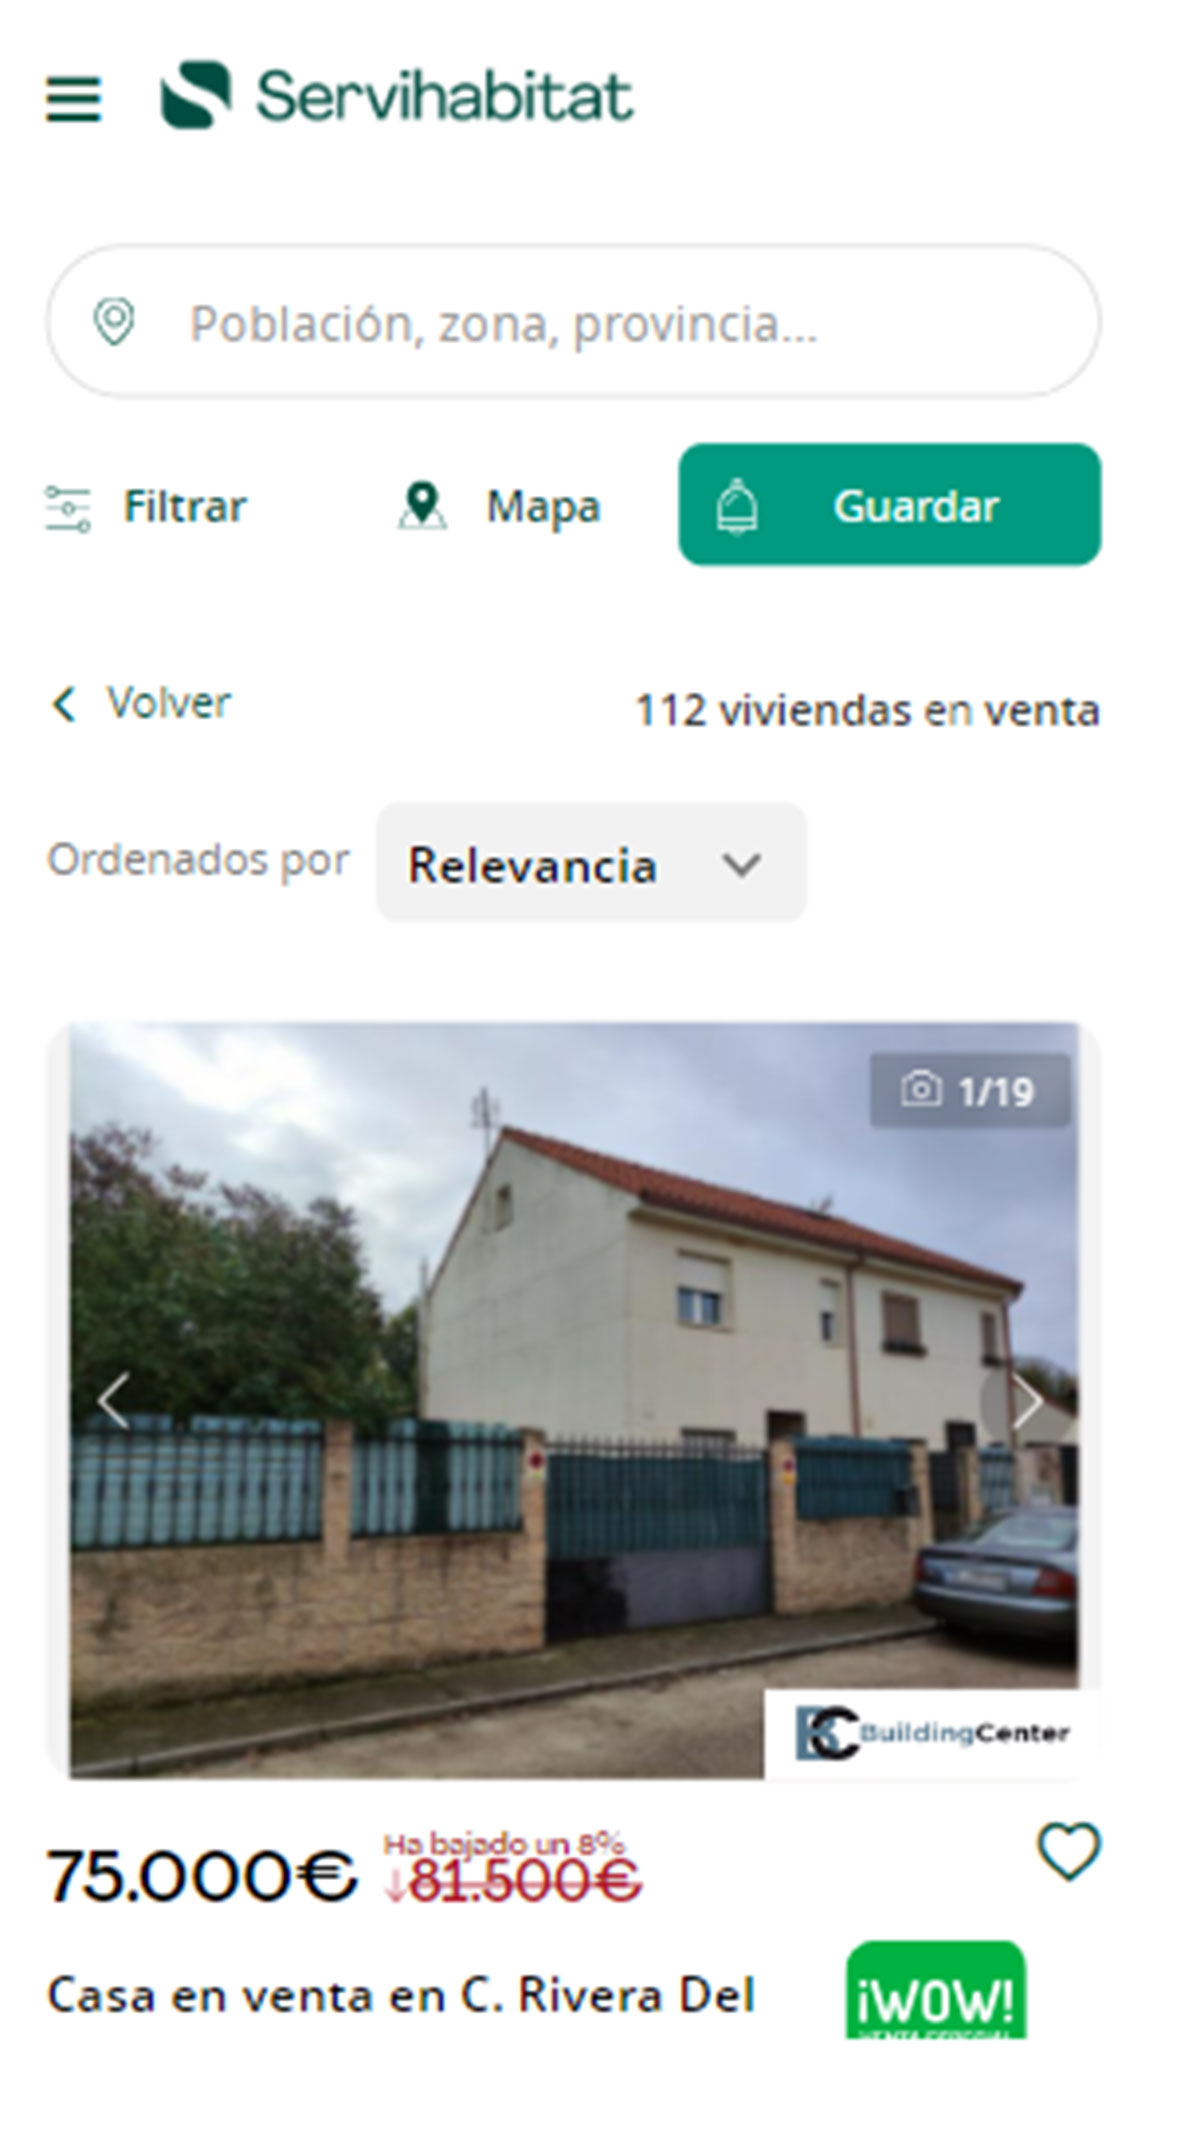 Catálogo de viviendas en Guadalajara de Servihabitat